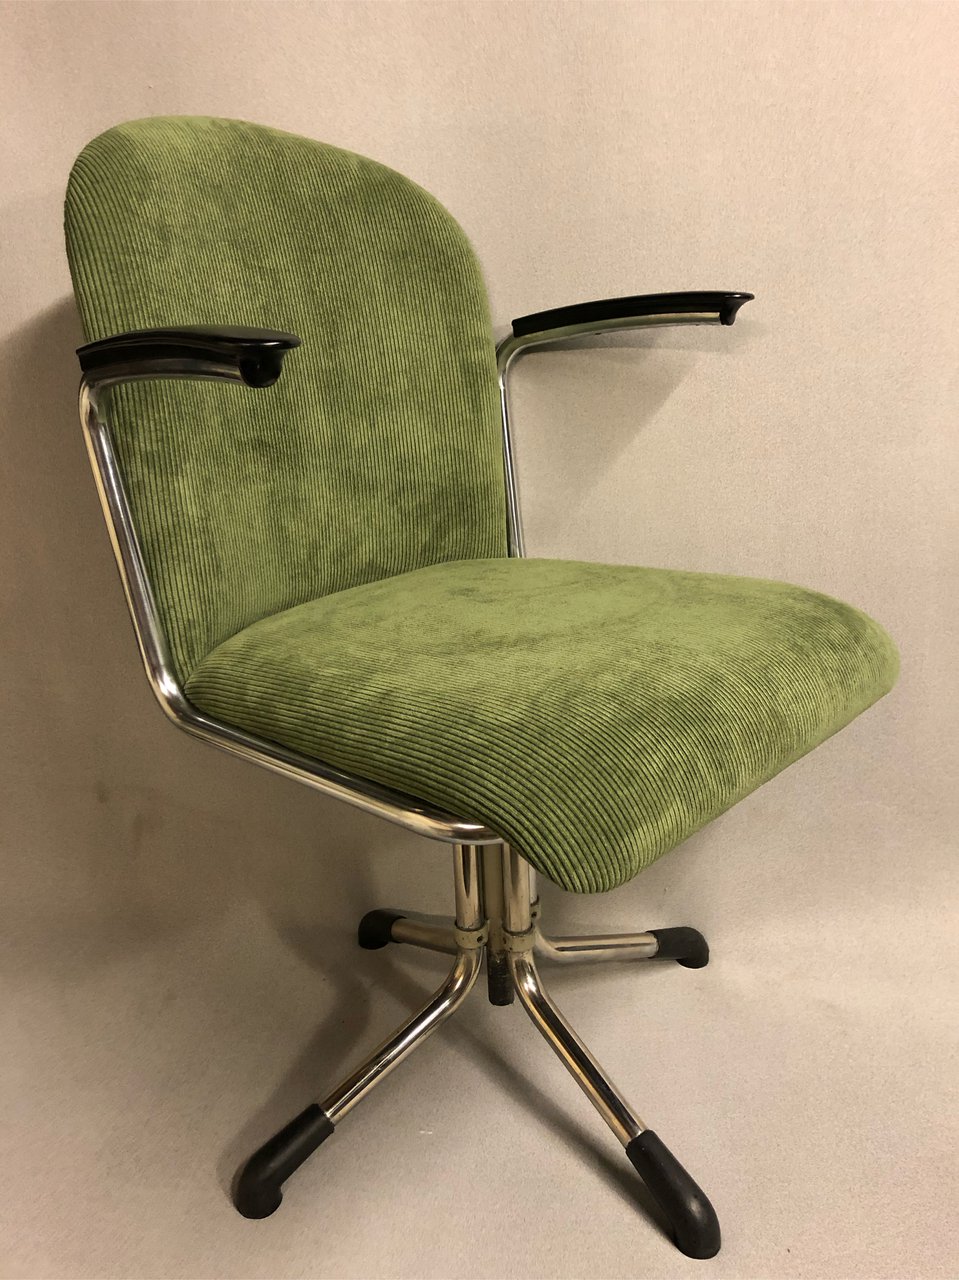 Gispen 356 office chair refurbished